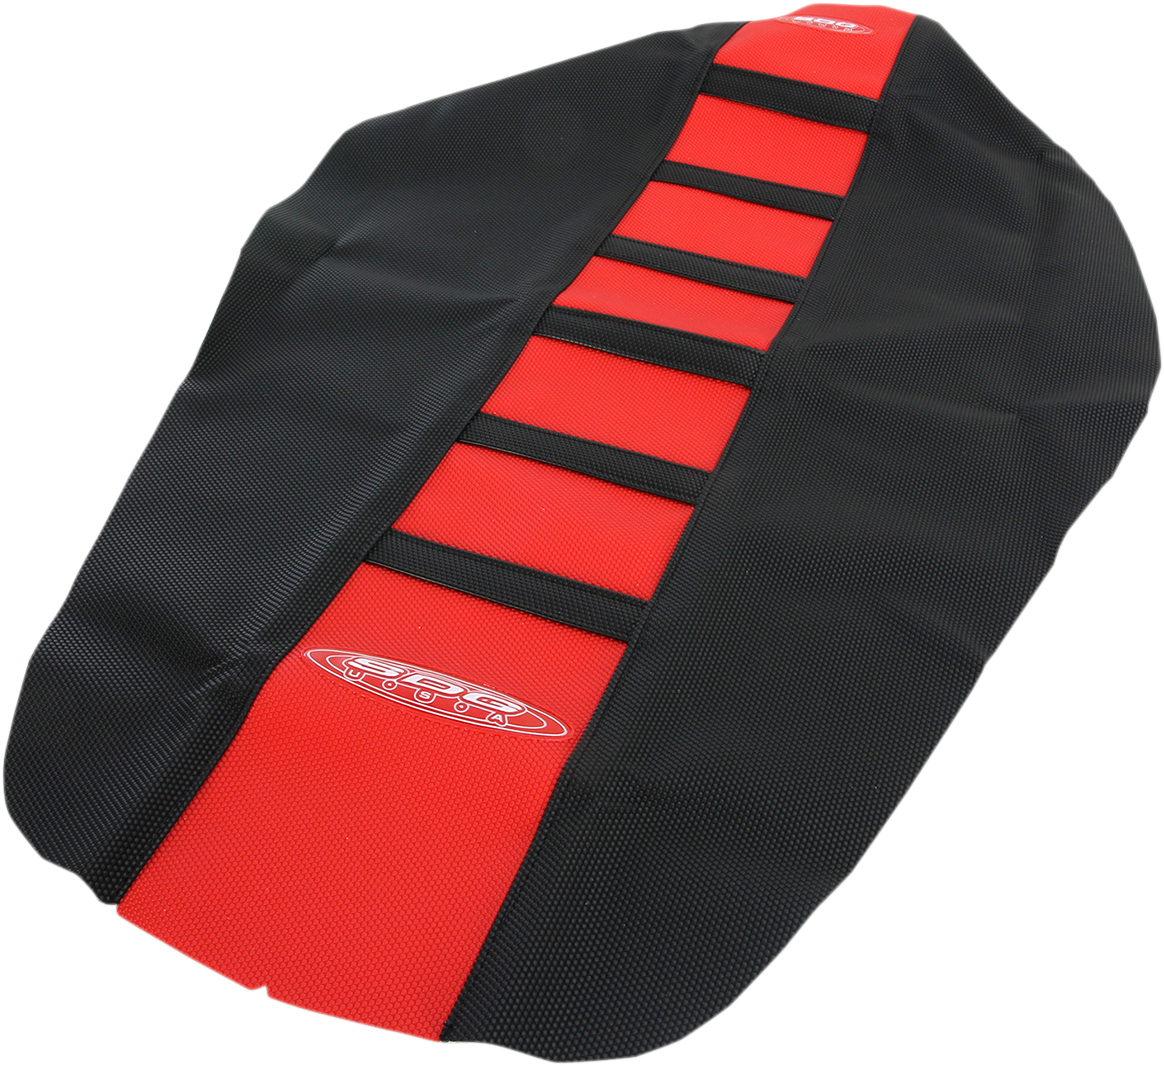 SDG 6-Ribbed Seat Cover - Black Ribs/Red Top/Black Sides 95937KRK